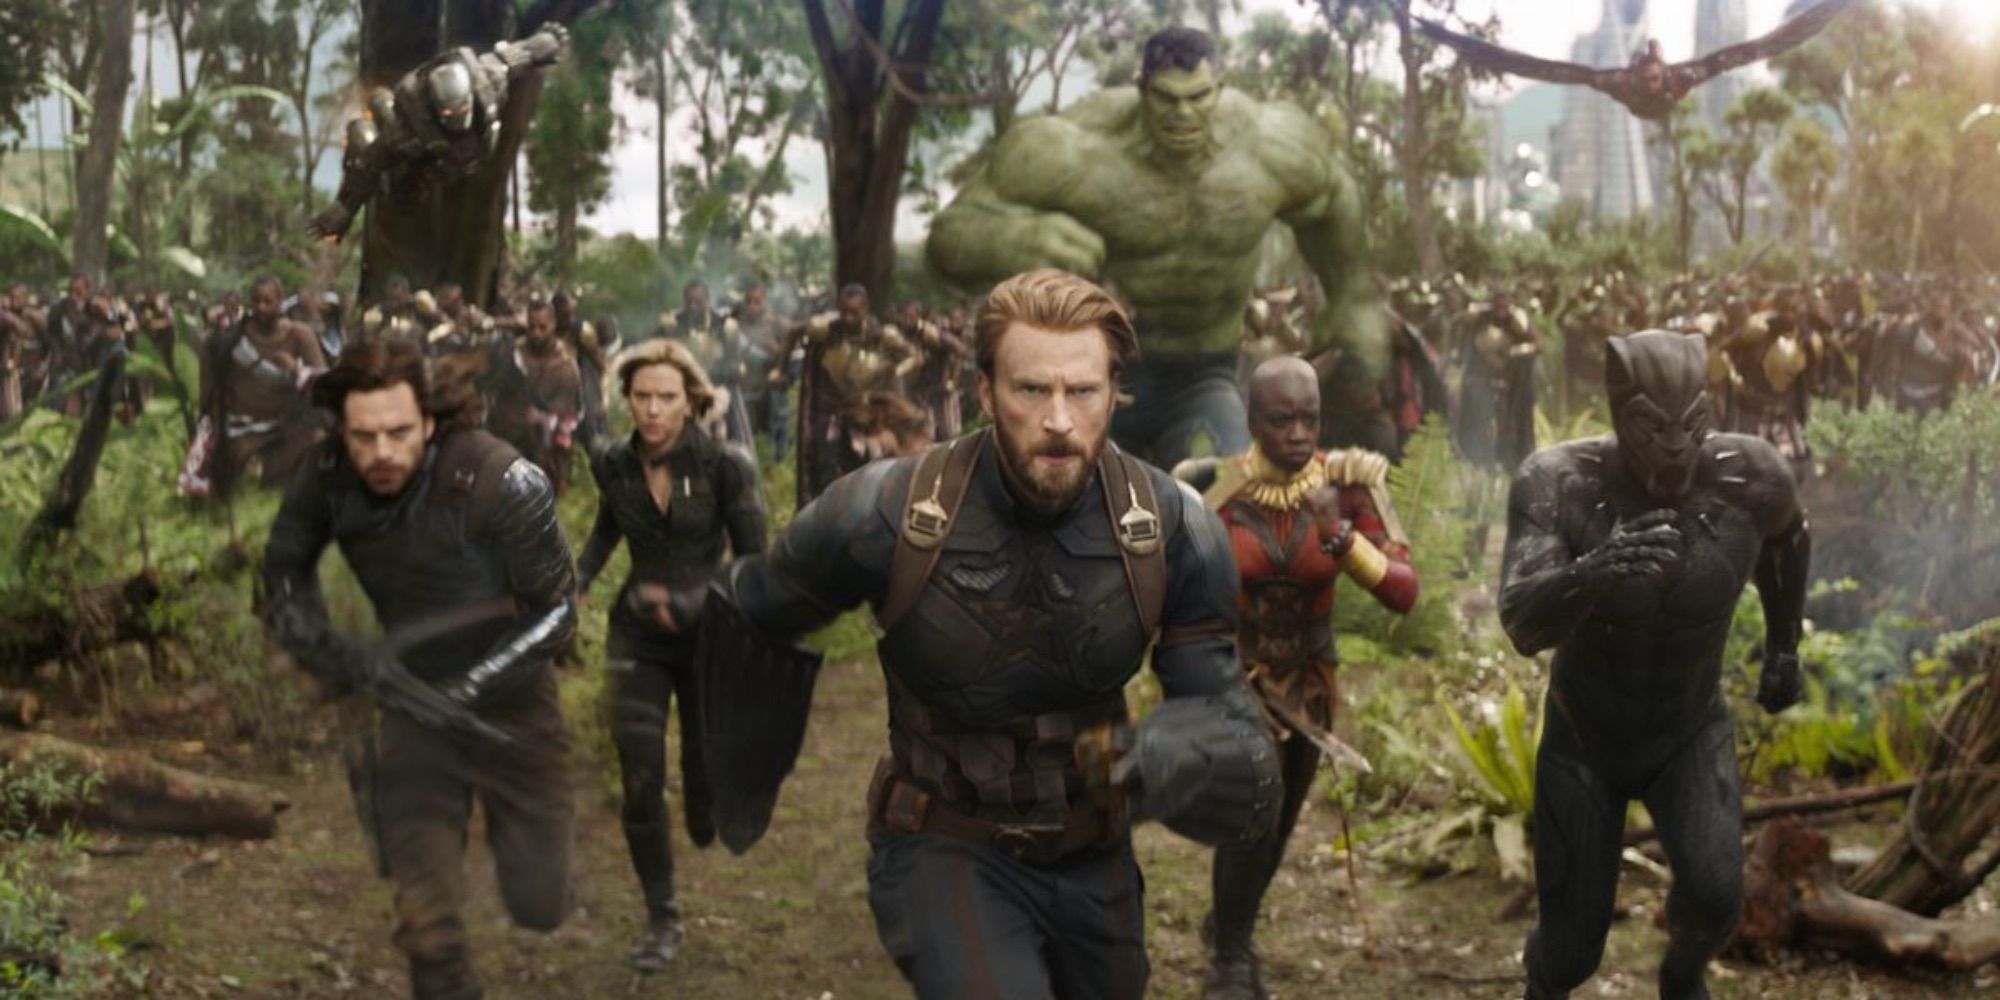 The Avengers running towards Thanos' Army in Wakanda in Avengers: Infinity War